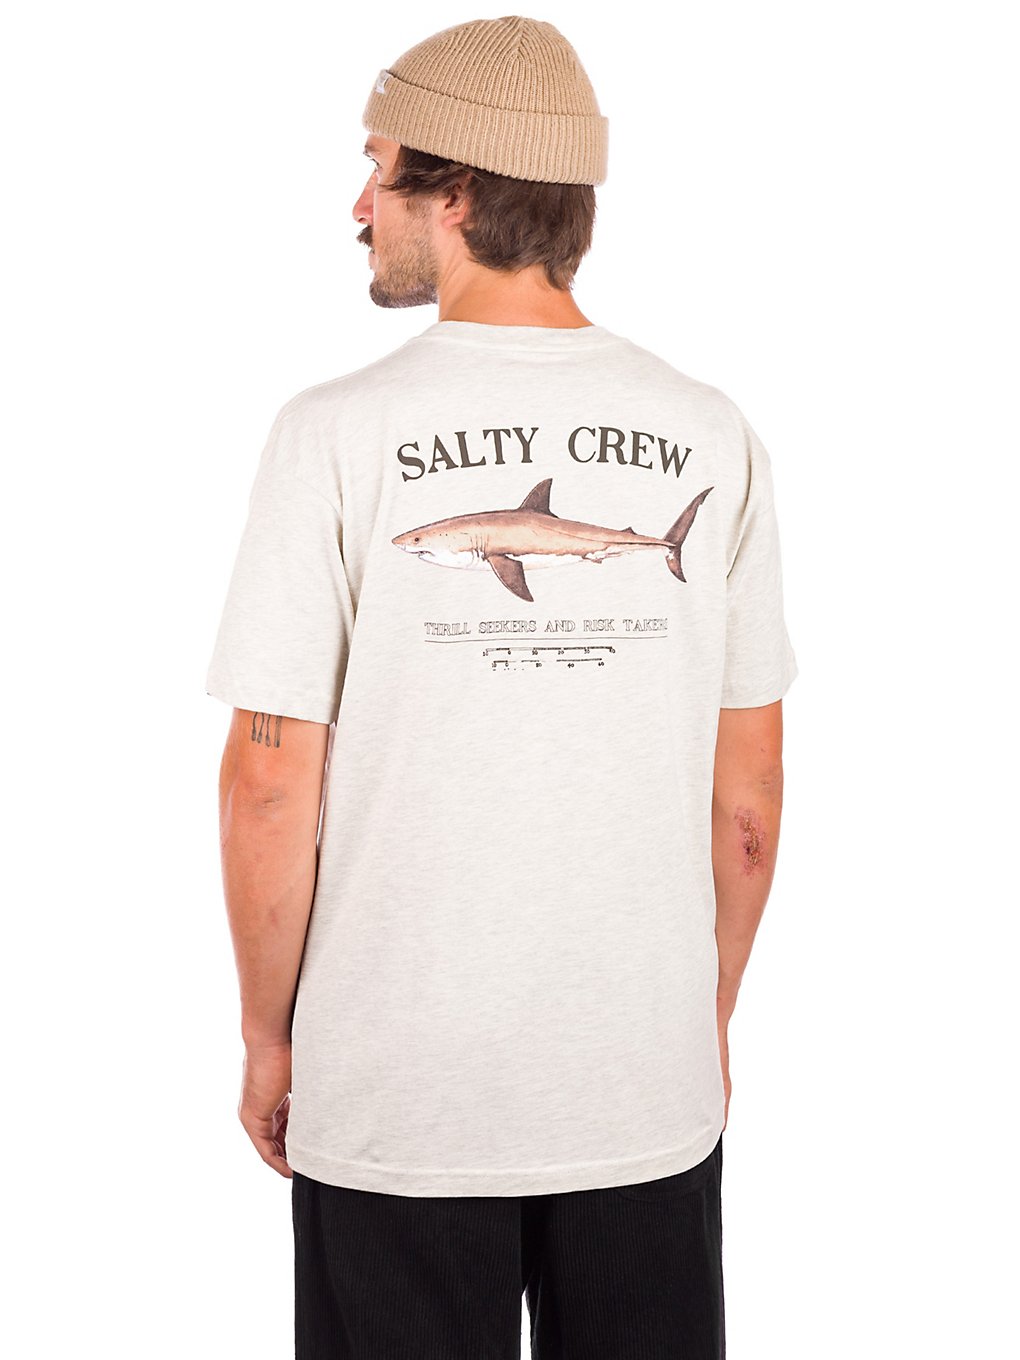 Salty Crew Bruce Premium T-Shirt oatmeal